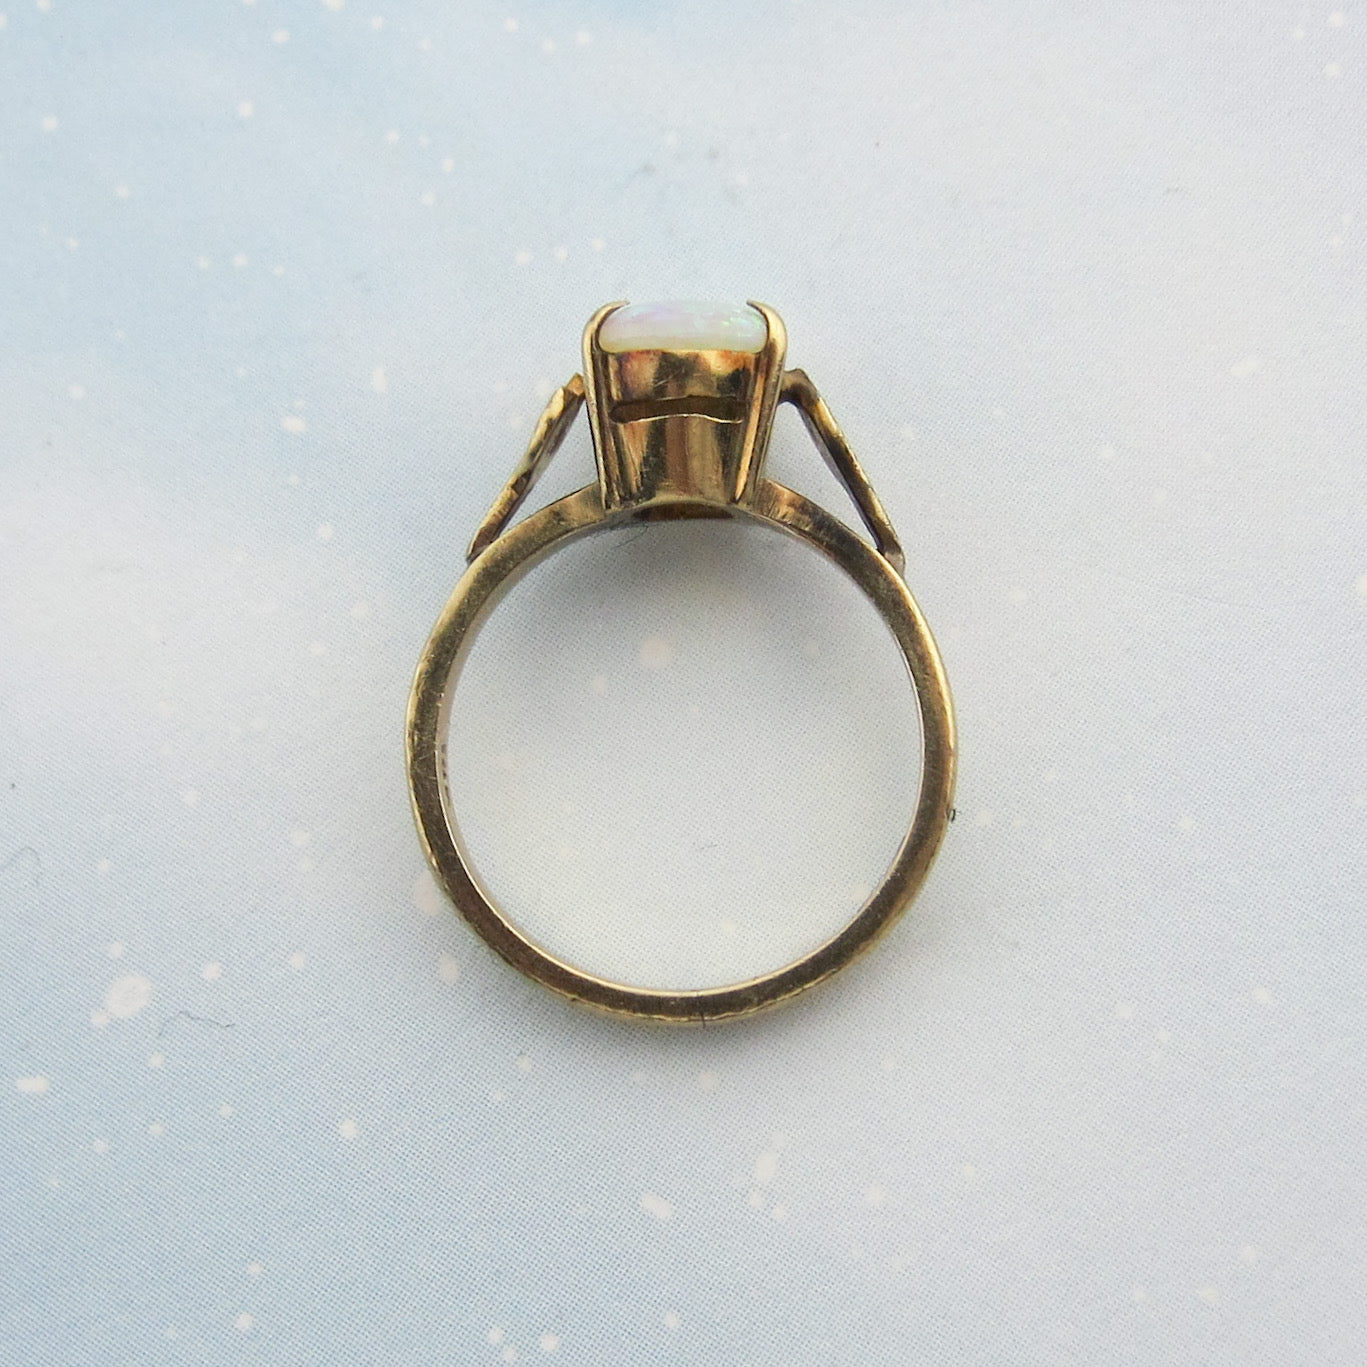 SOLD--Beautiful Vintage Opal Ring 18k c. 1970